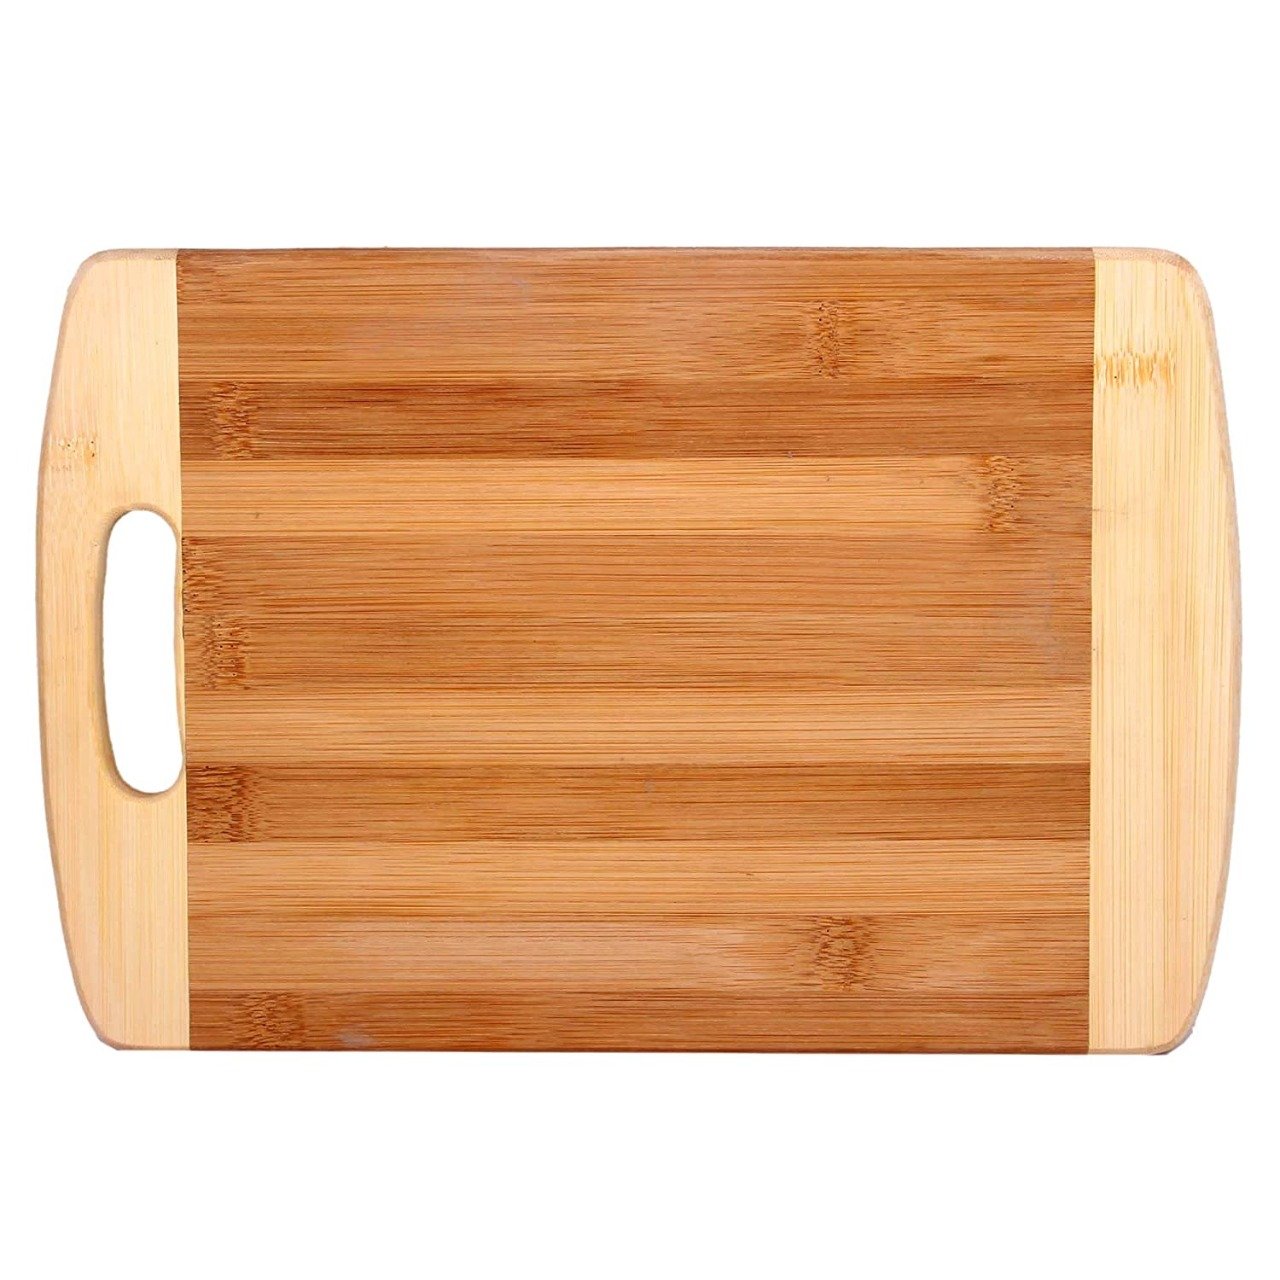 2478 Bamboo Kitchen Chopping Cutting Slicing Wooden Board - SkyShopy